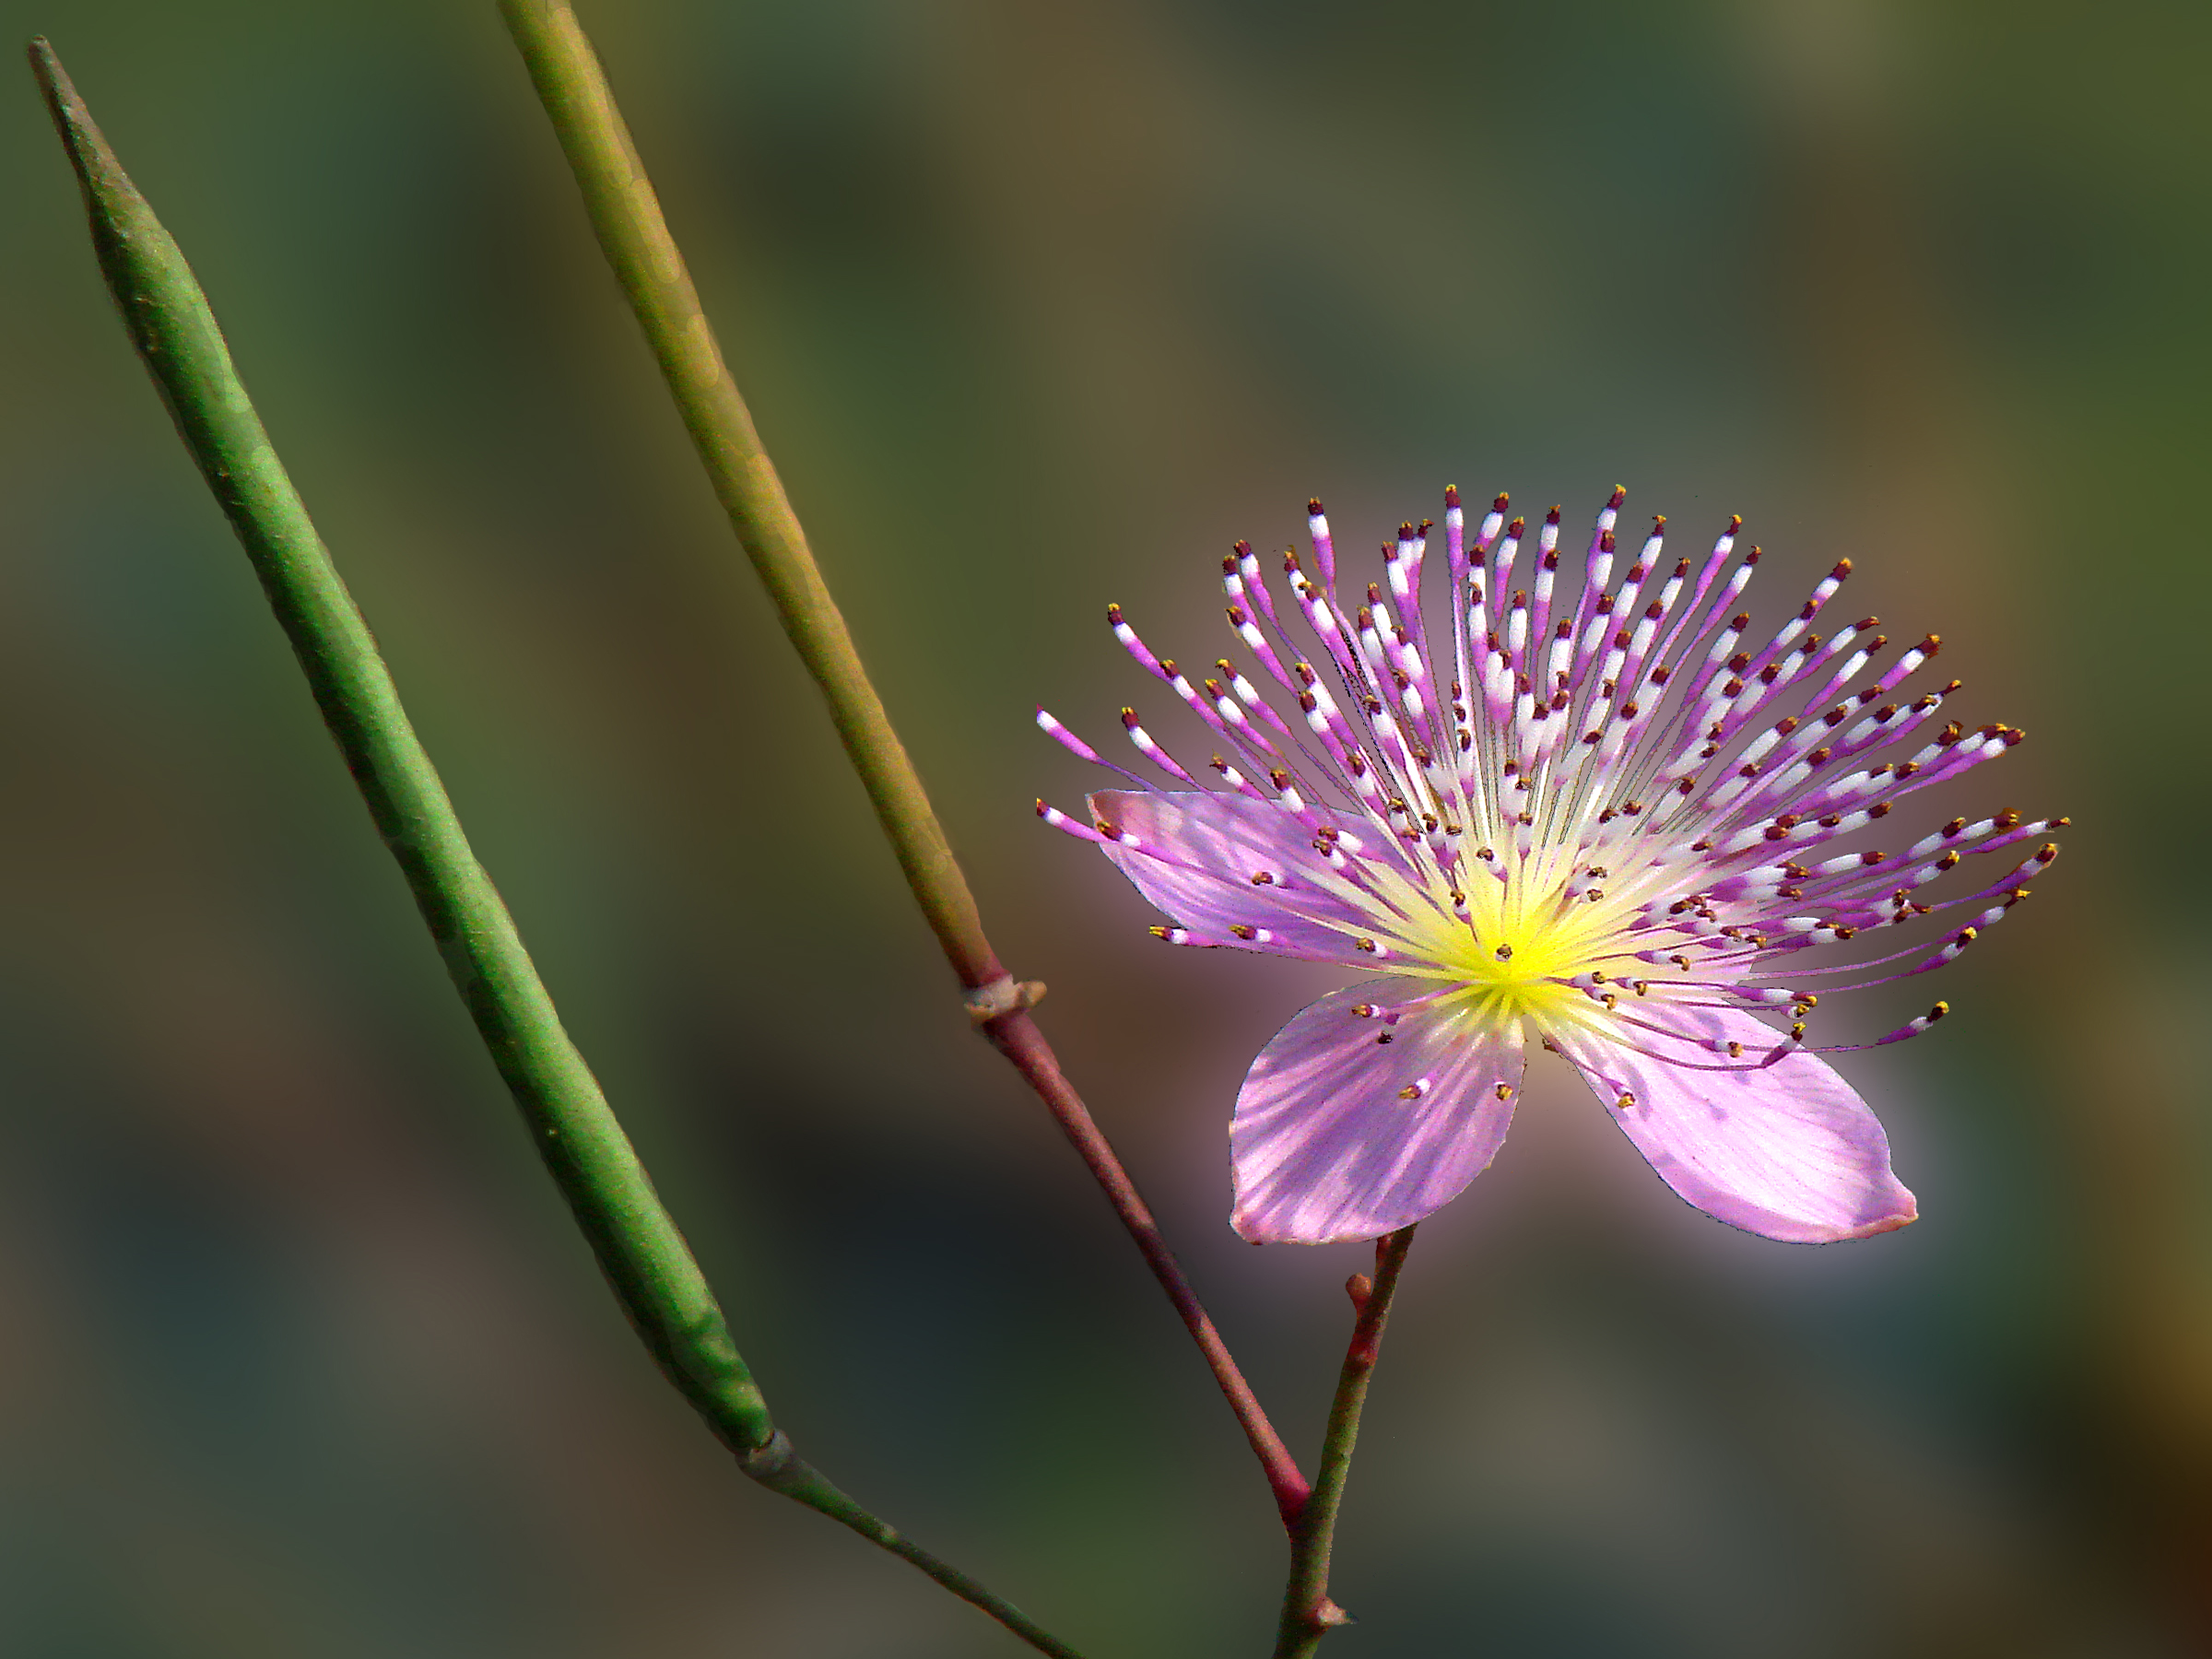 File:Wild-flower.jpg - Wikimedia Commons